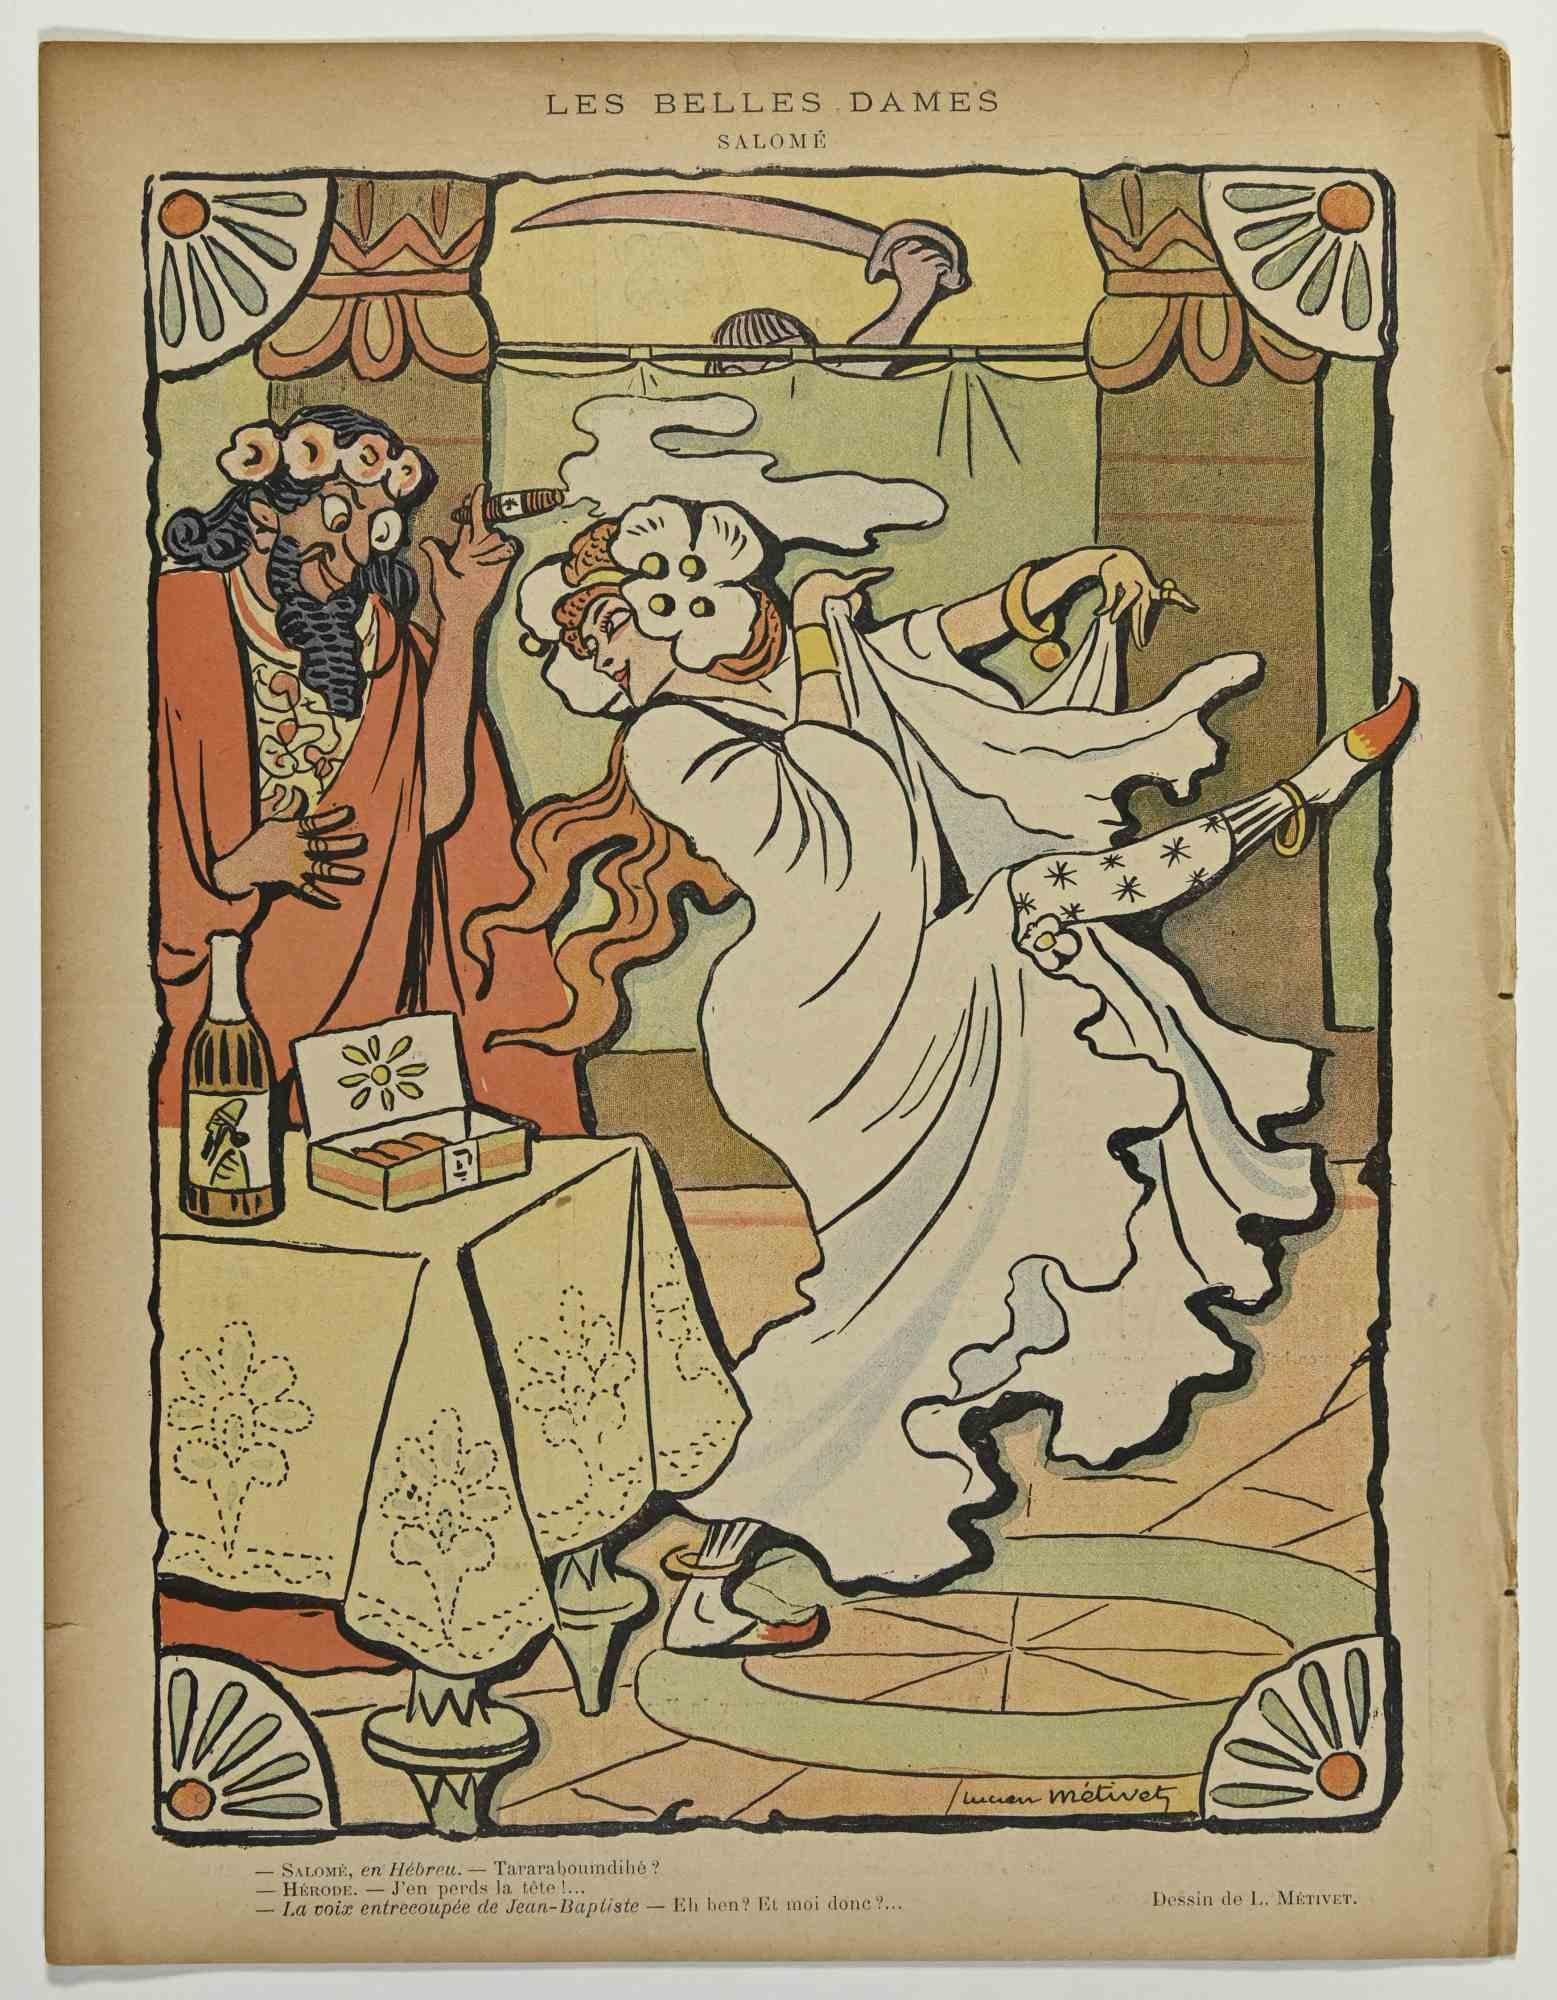 Le Rire - Illustrated Magazine after Lucien Metivet - 1896